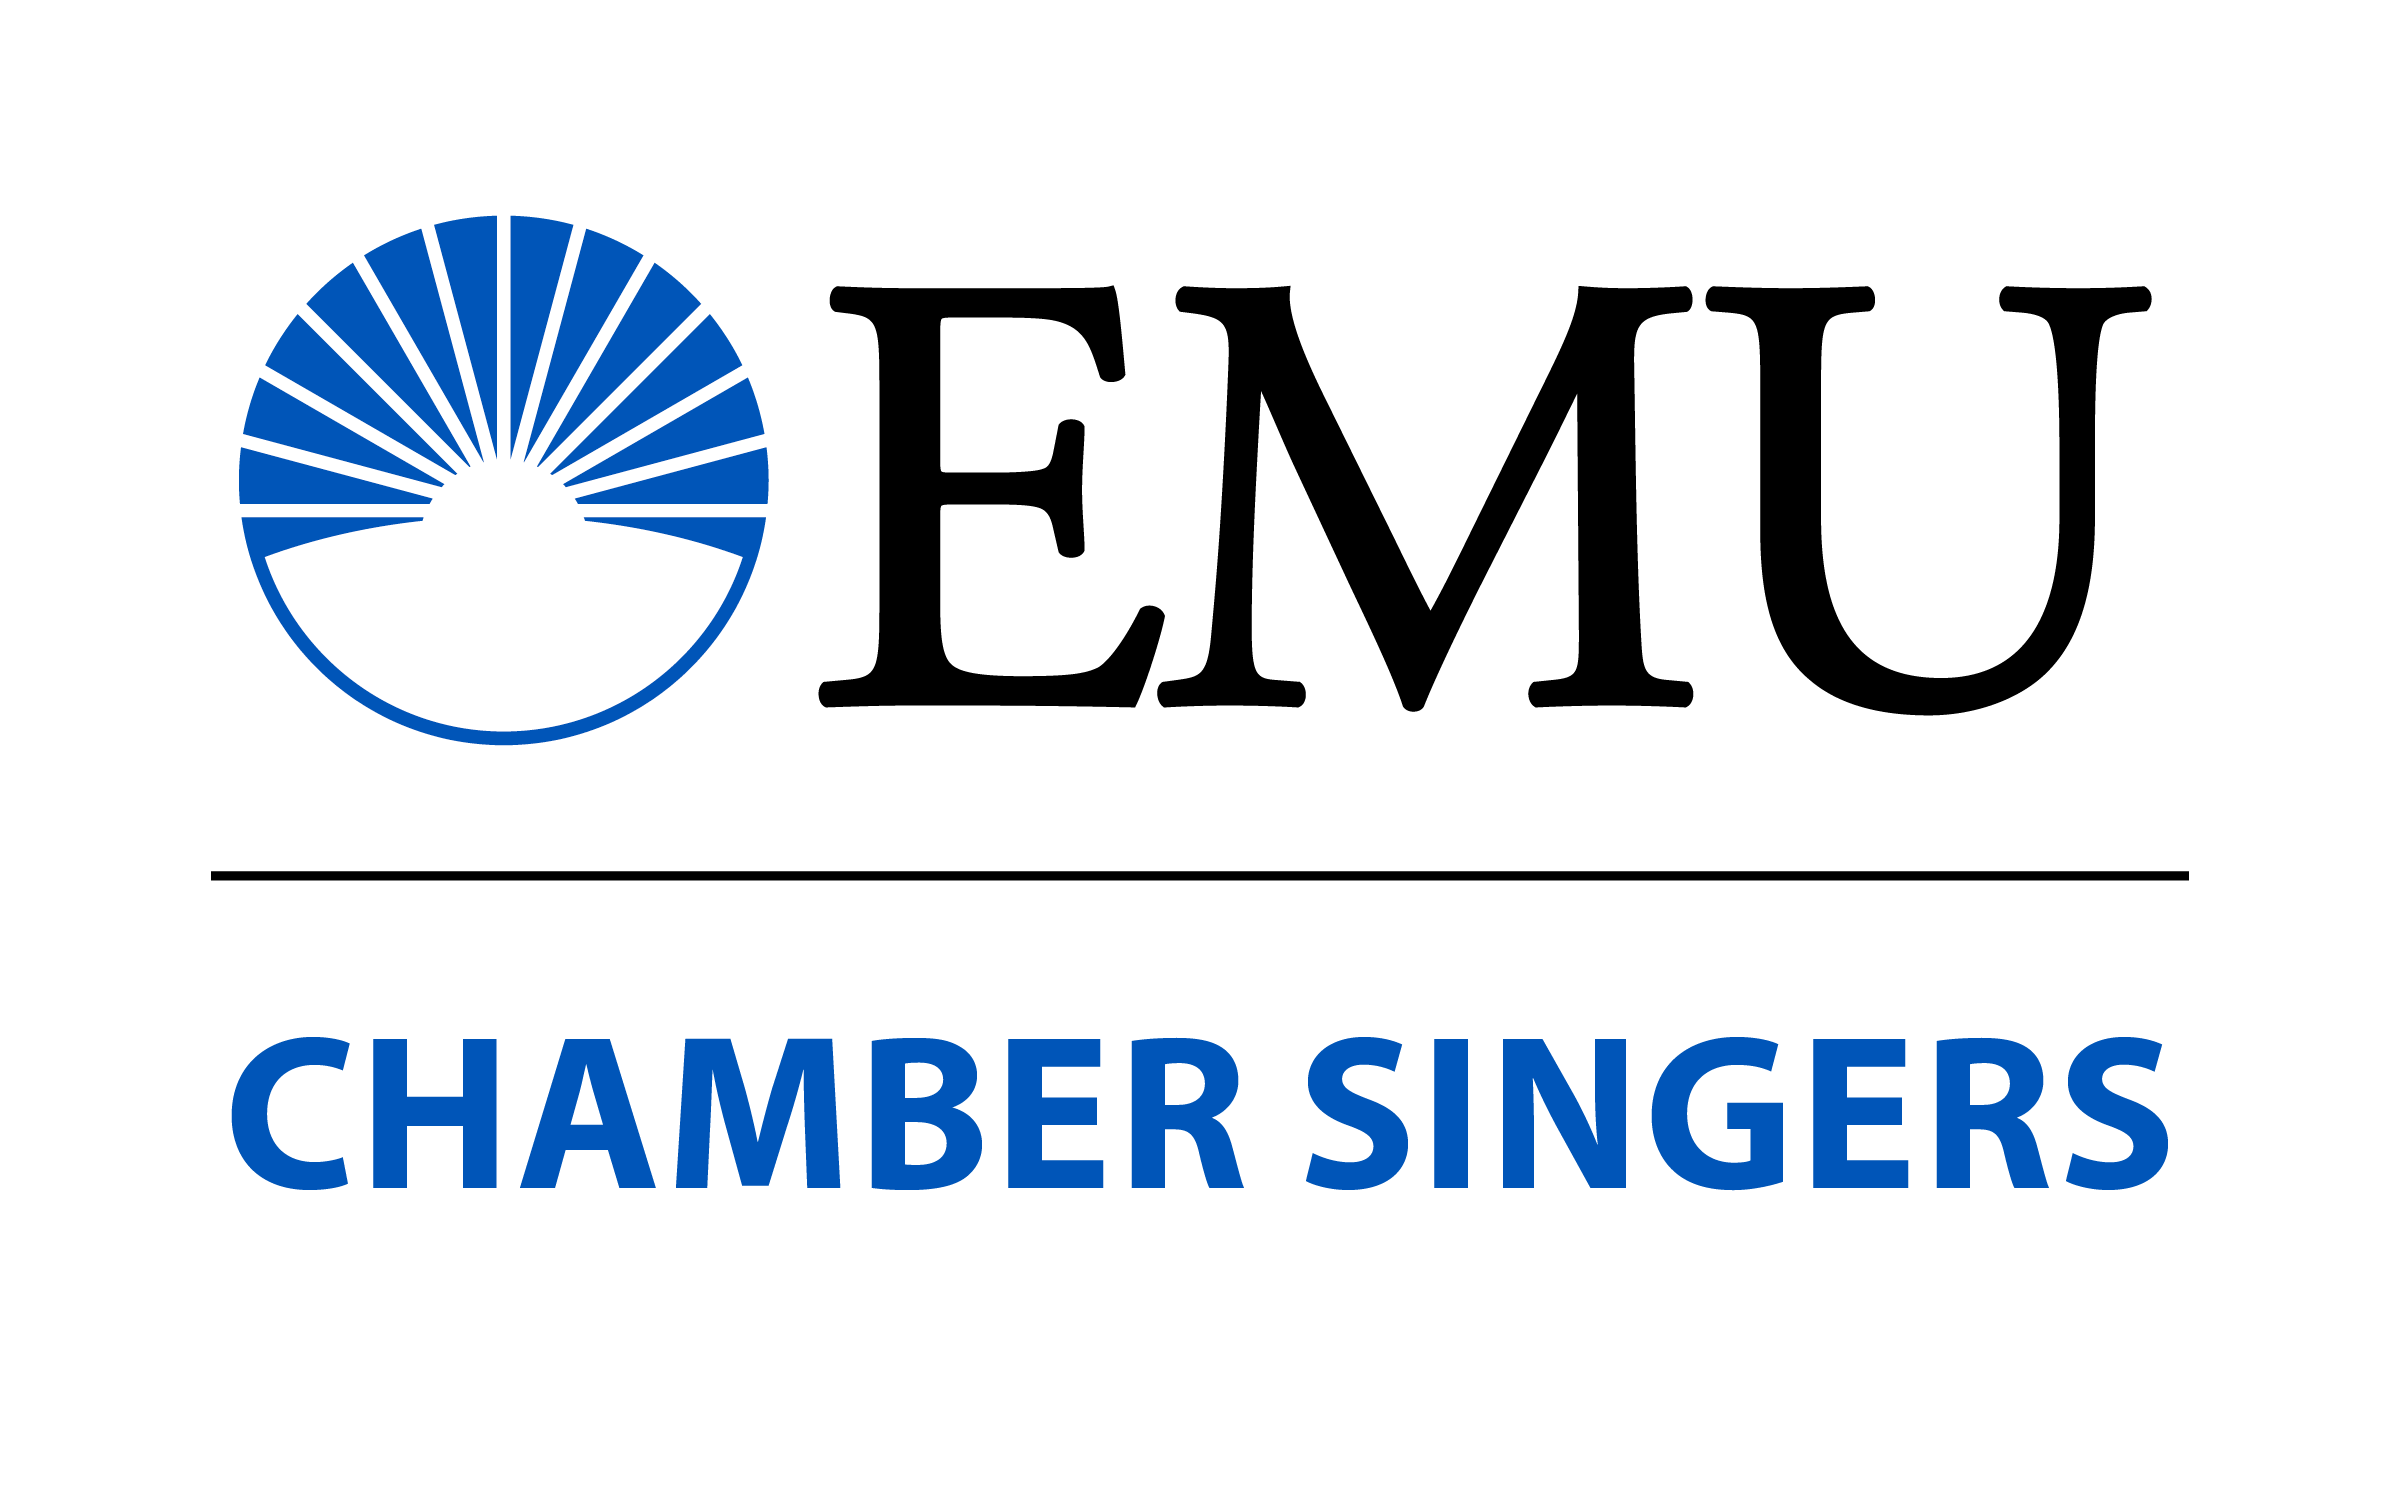 EMU Chamber Singers Logo